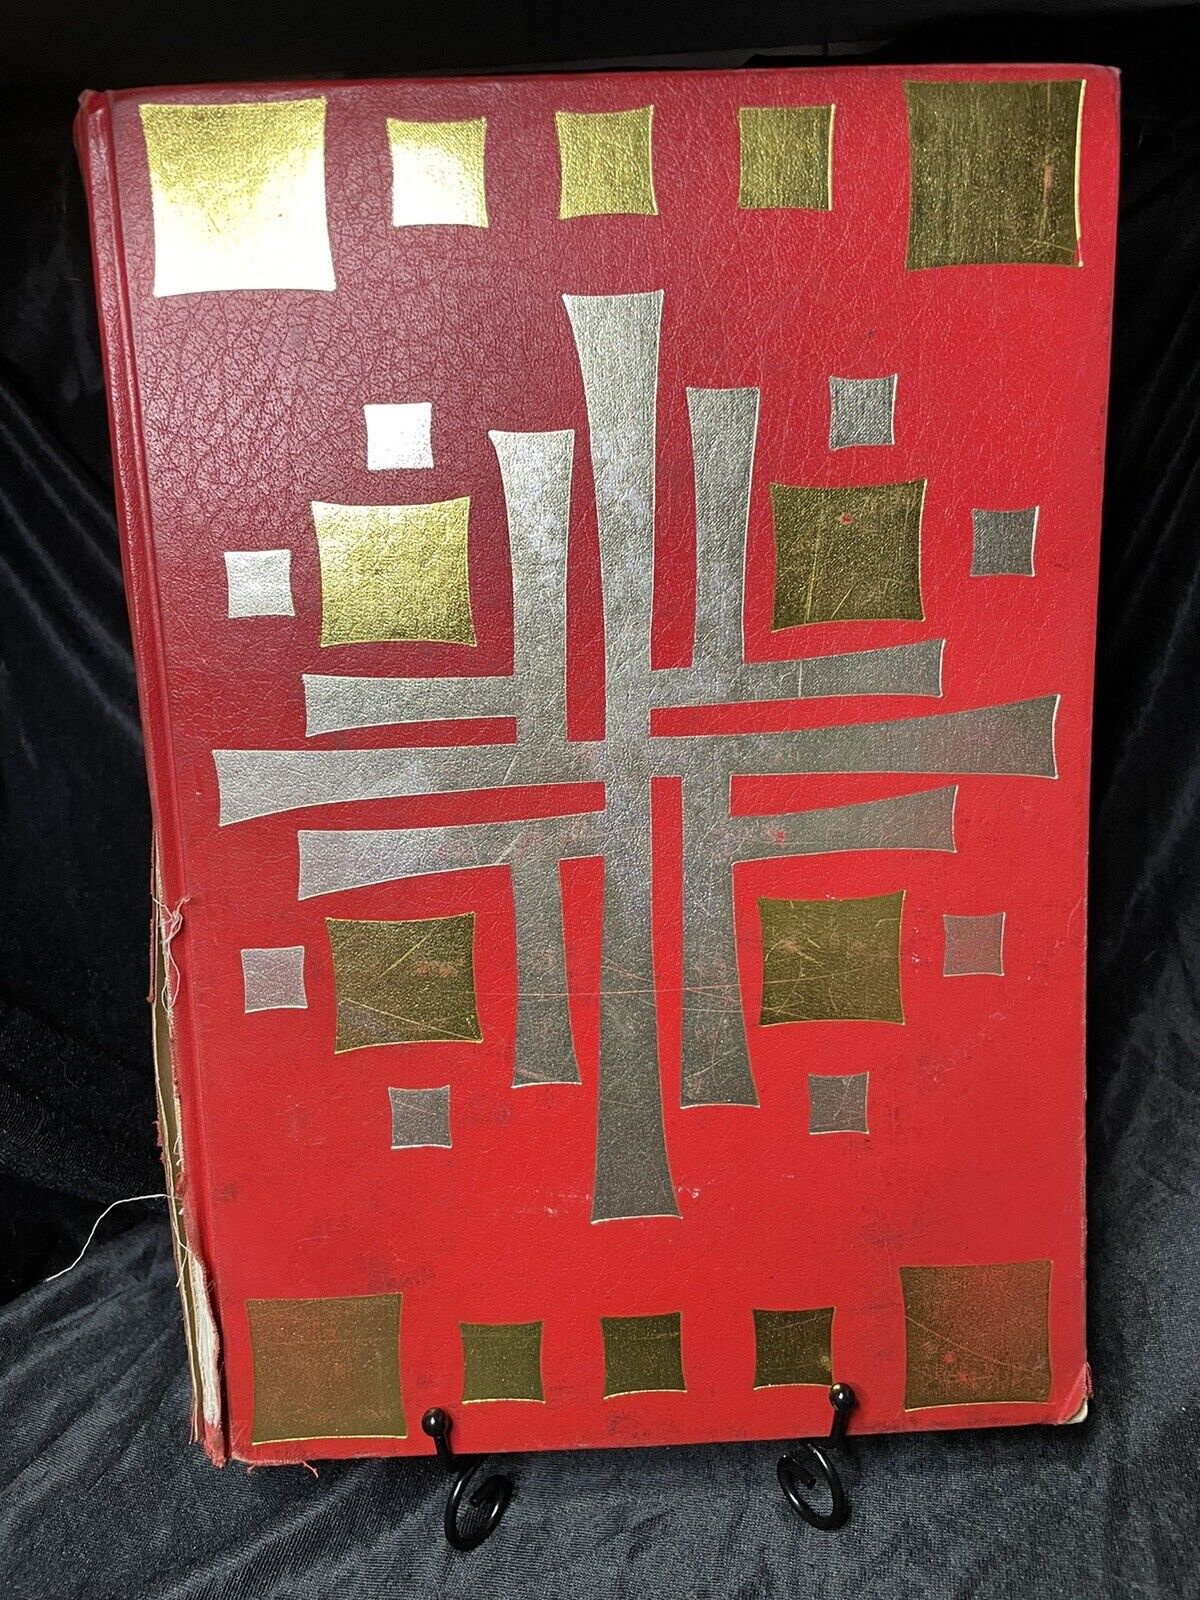 The Roman Missal, The Book of Gospels, c.2000